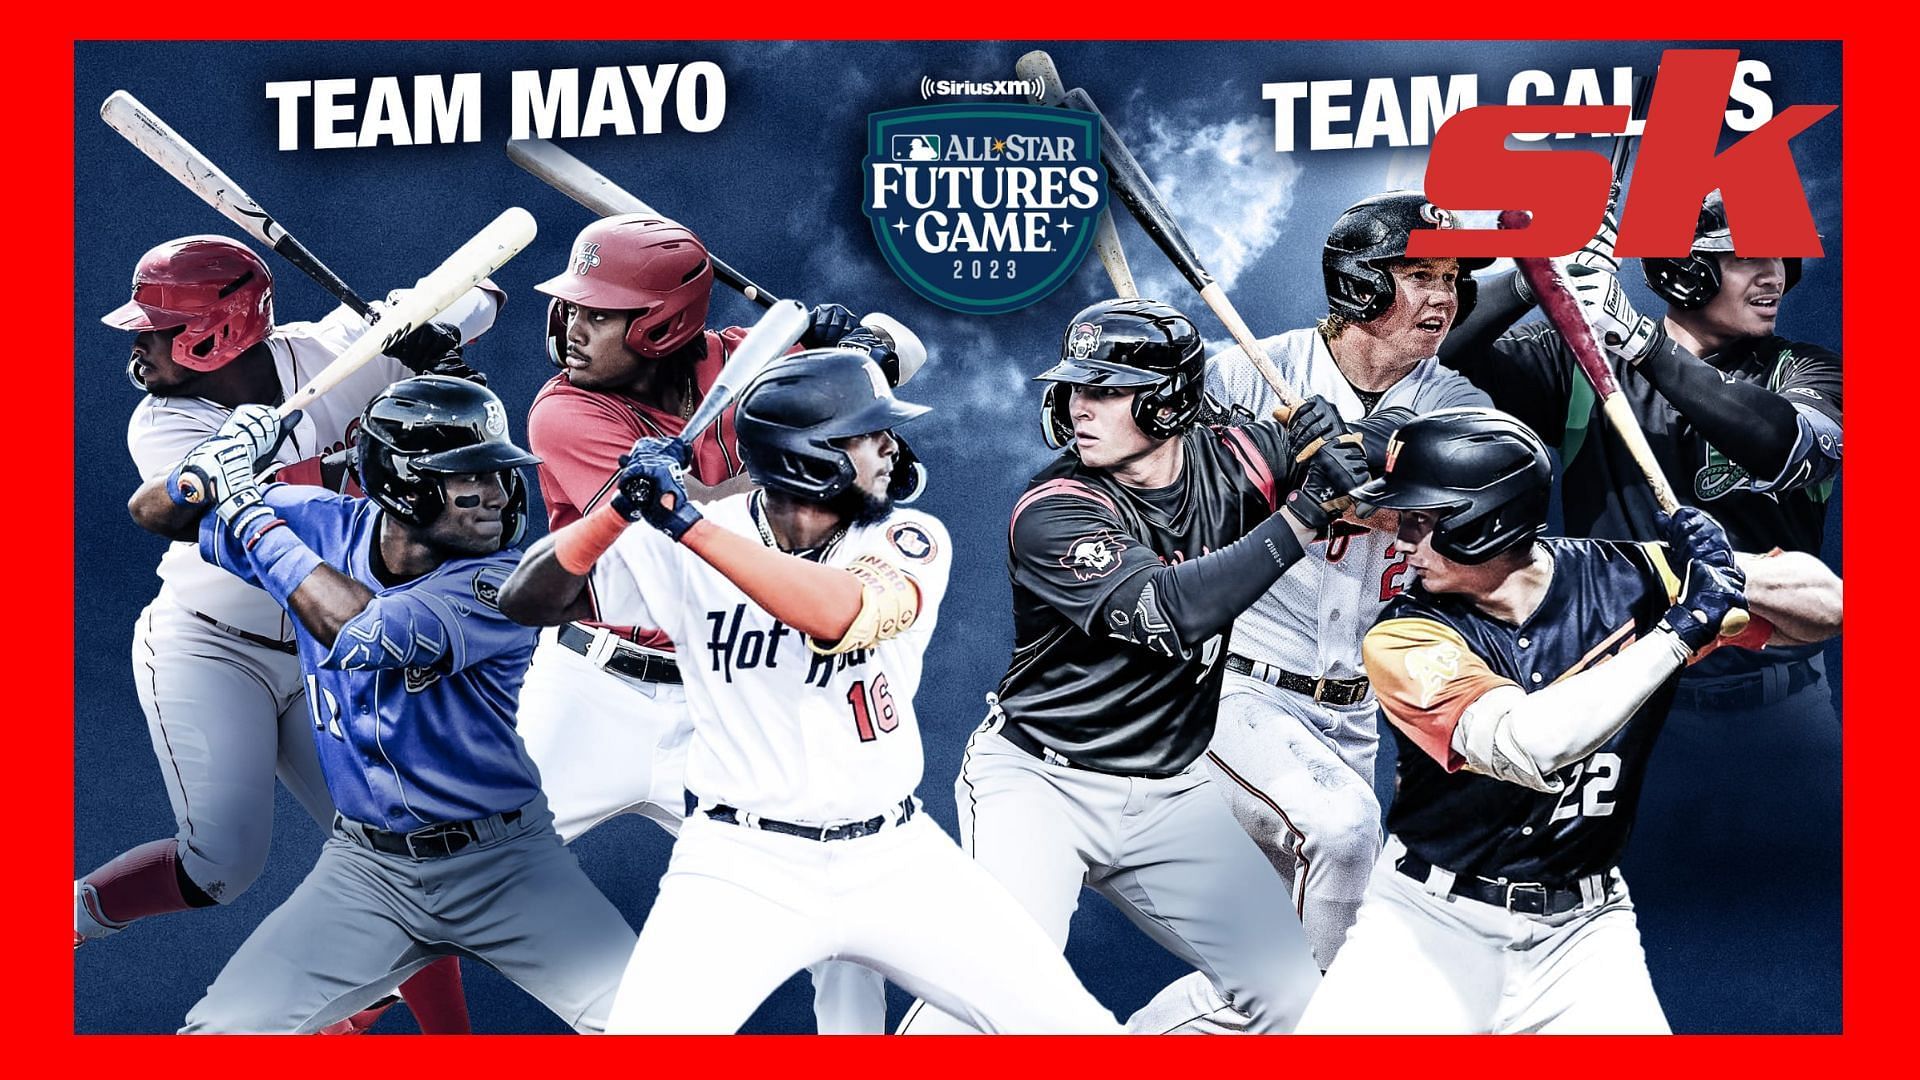 2019 MLB Futures Game: Stars of tomorrow on display